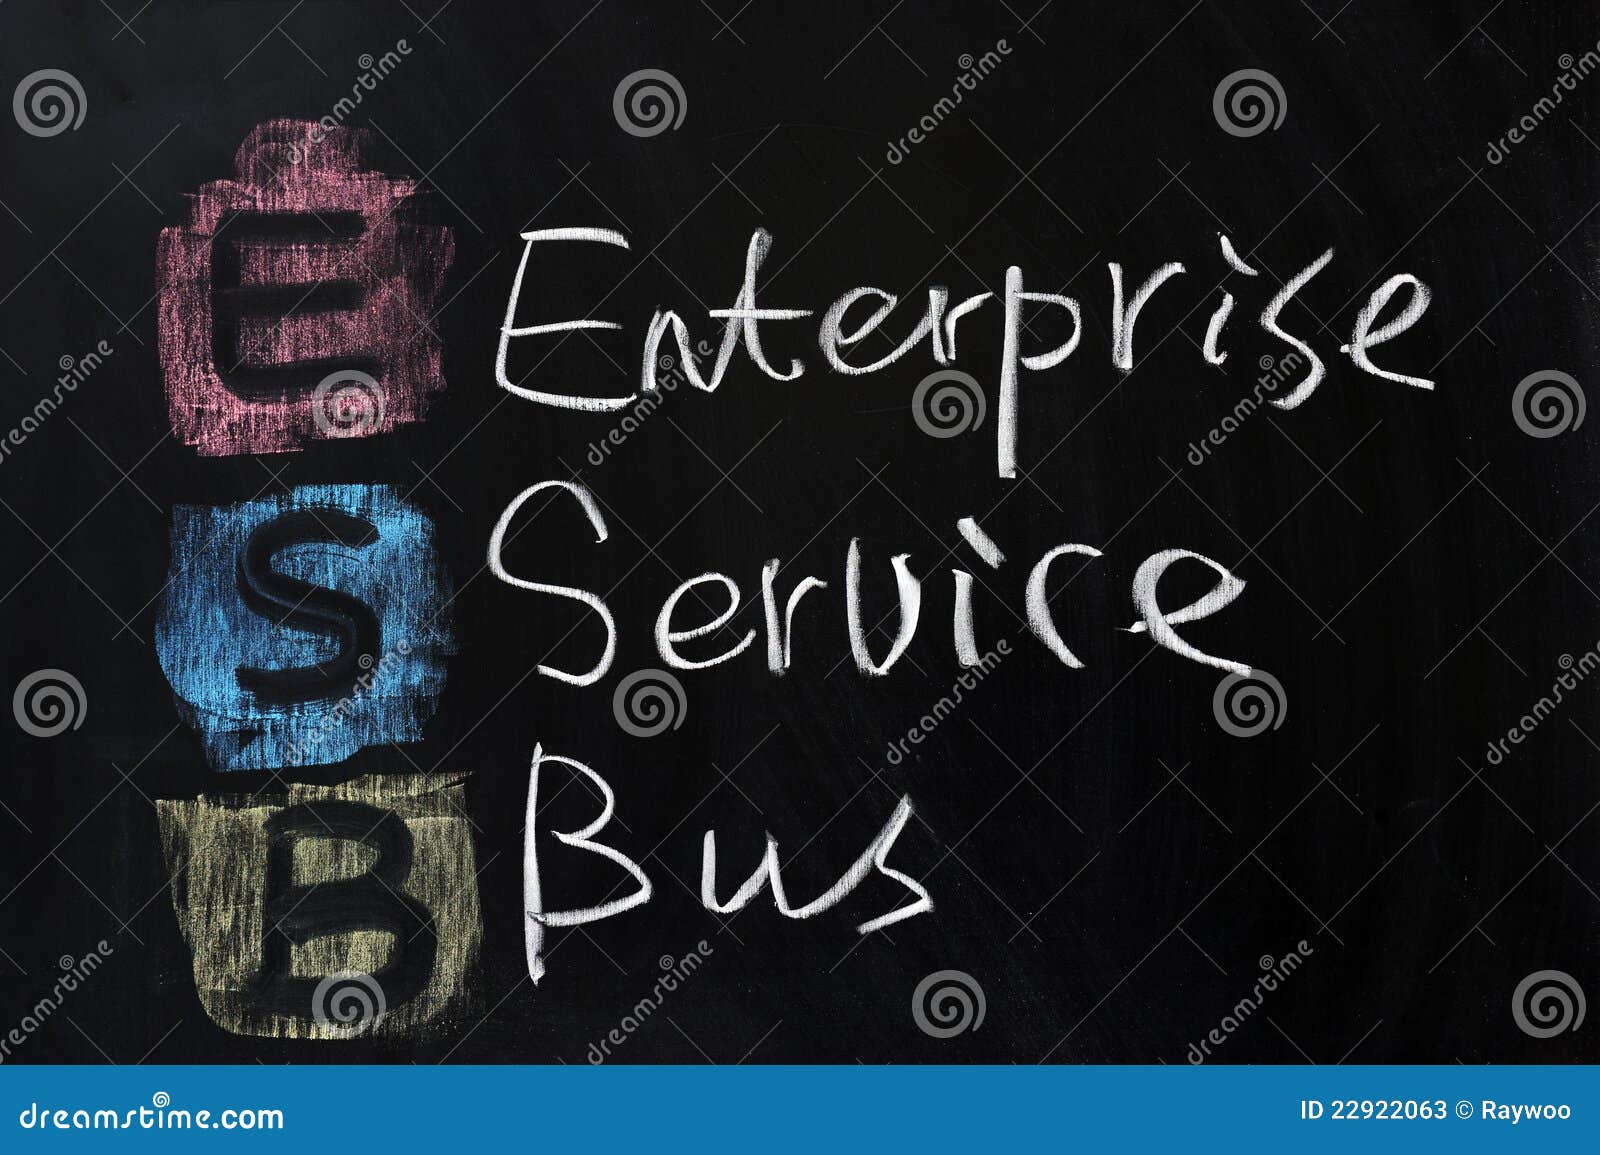 esb - enterprise service bus